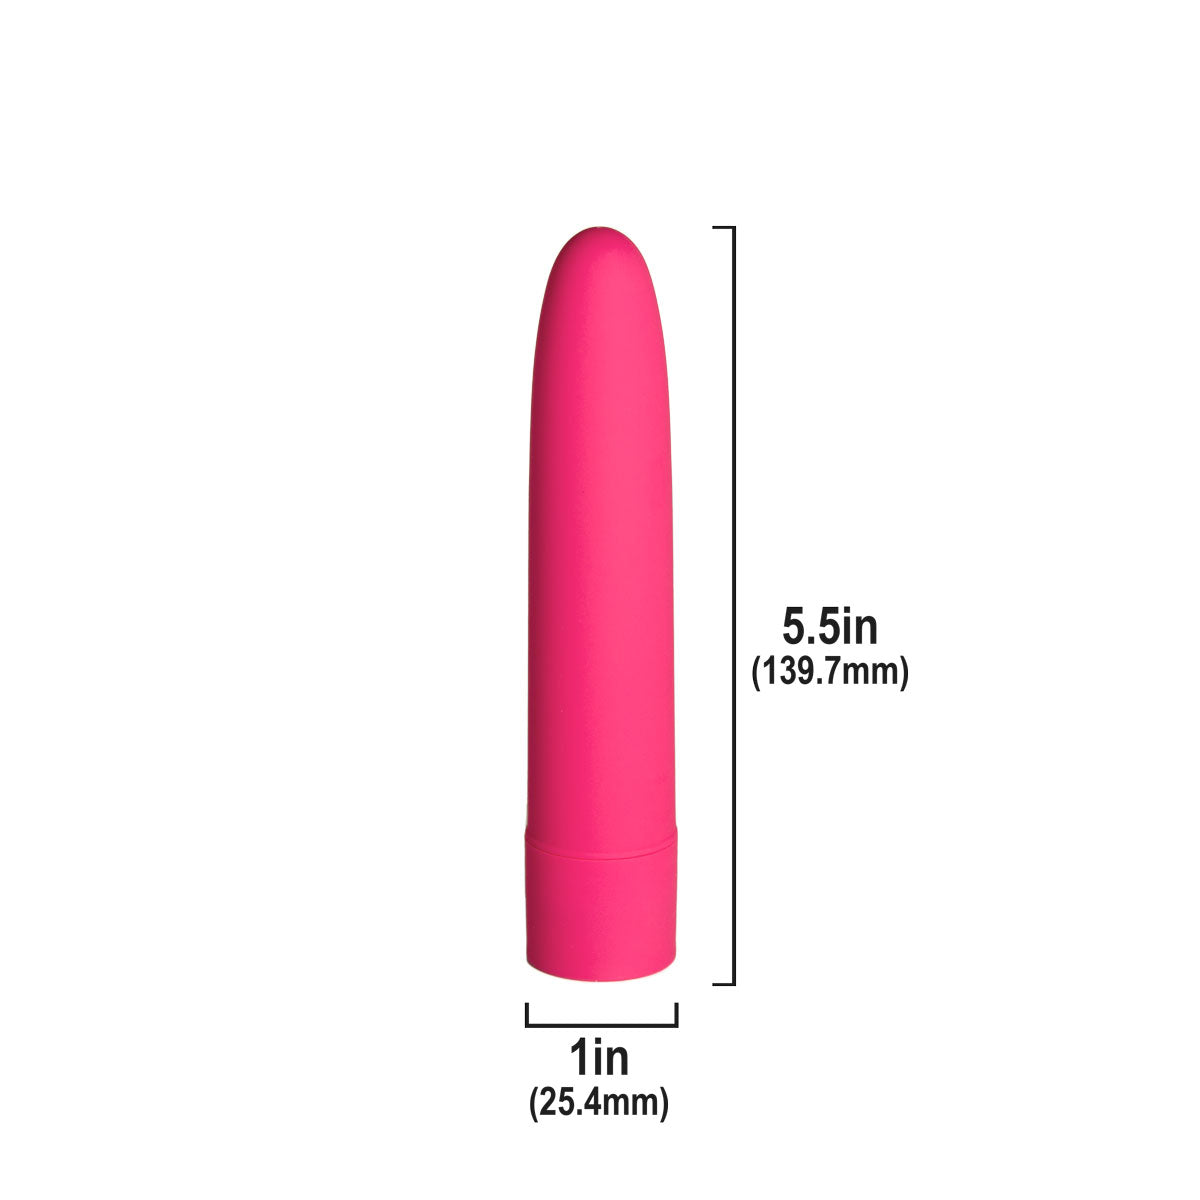 Eezy Pleezy – 5.5&quot; Classic Vibrator – Pink